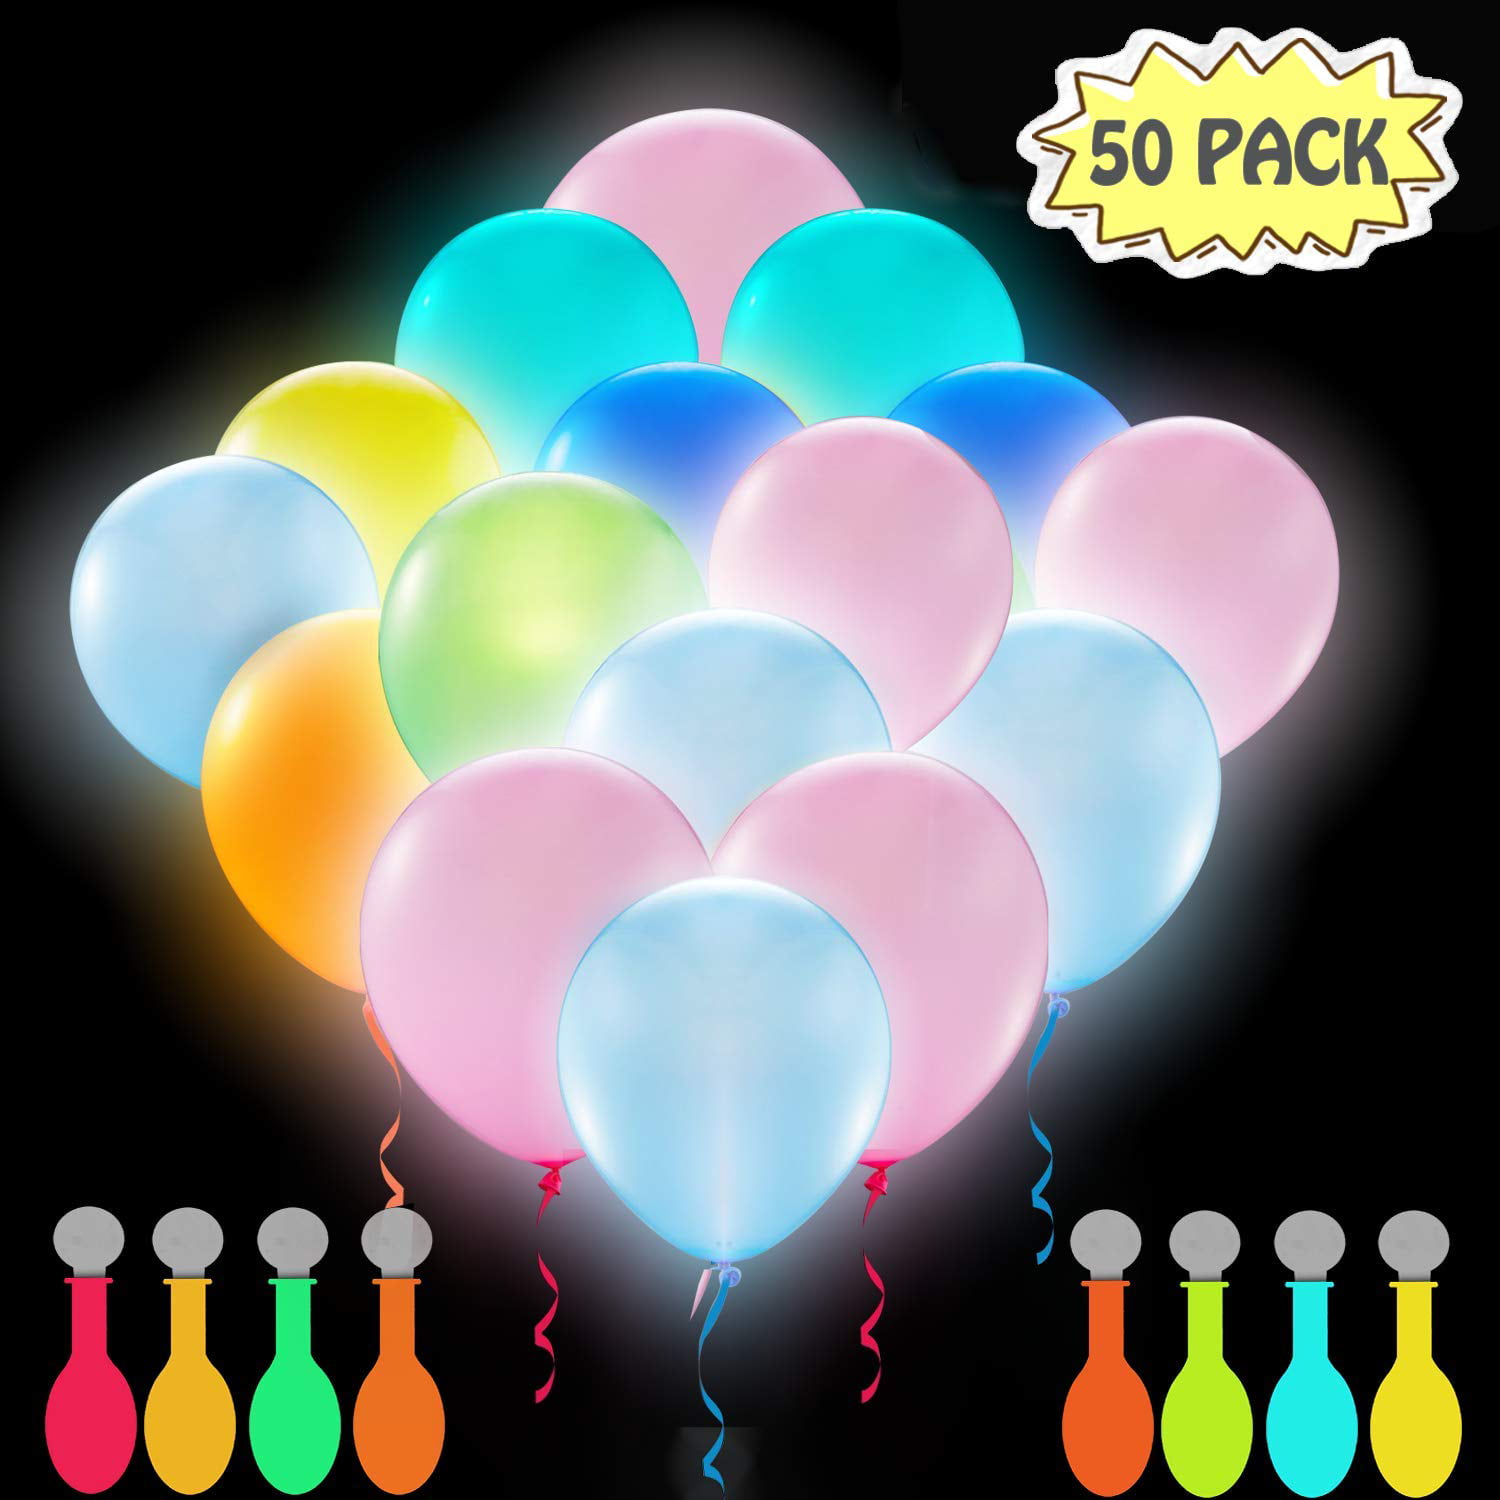 11 Glow in the Dark Star Balloons Glow in the Dark Confetti Balloons Cosmic Birthday Party